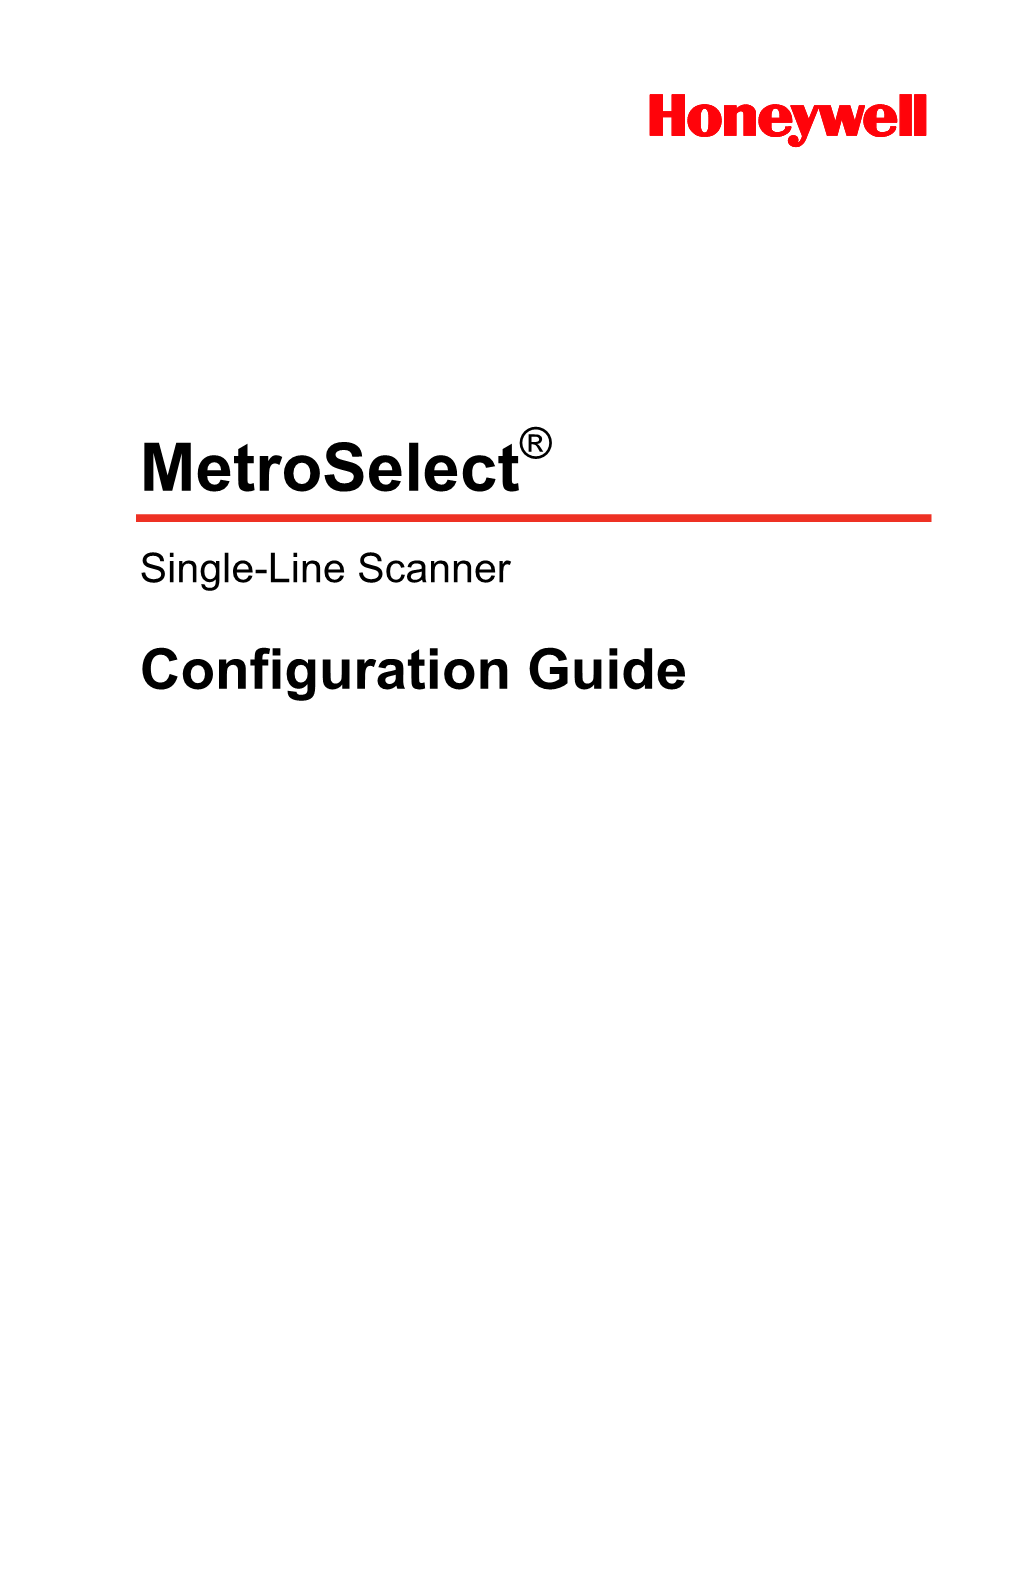 Metroselect Single-Line Configuration Guide